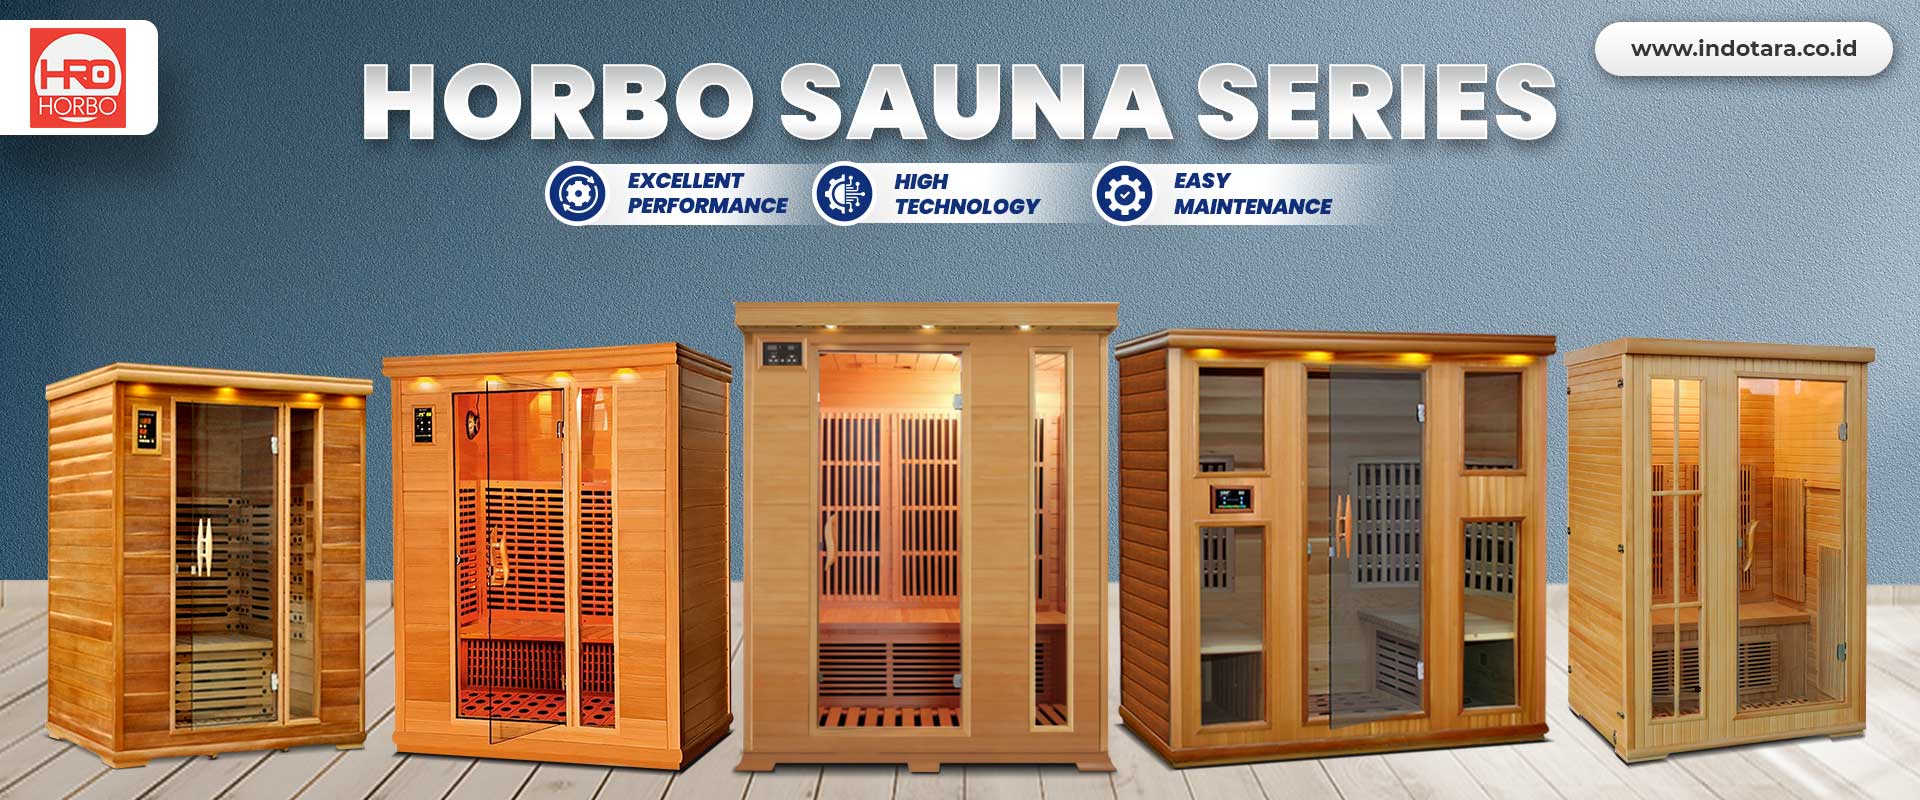 Horbo Sauna Series